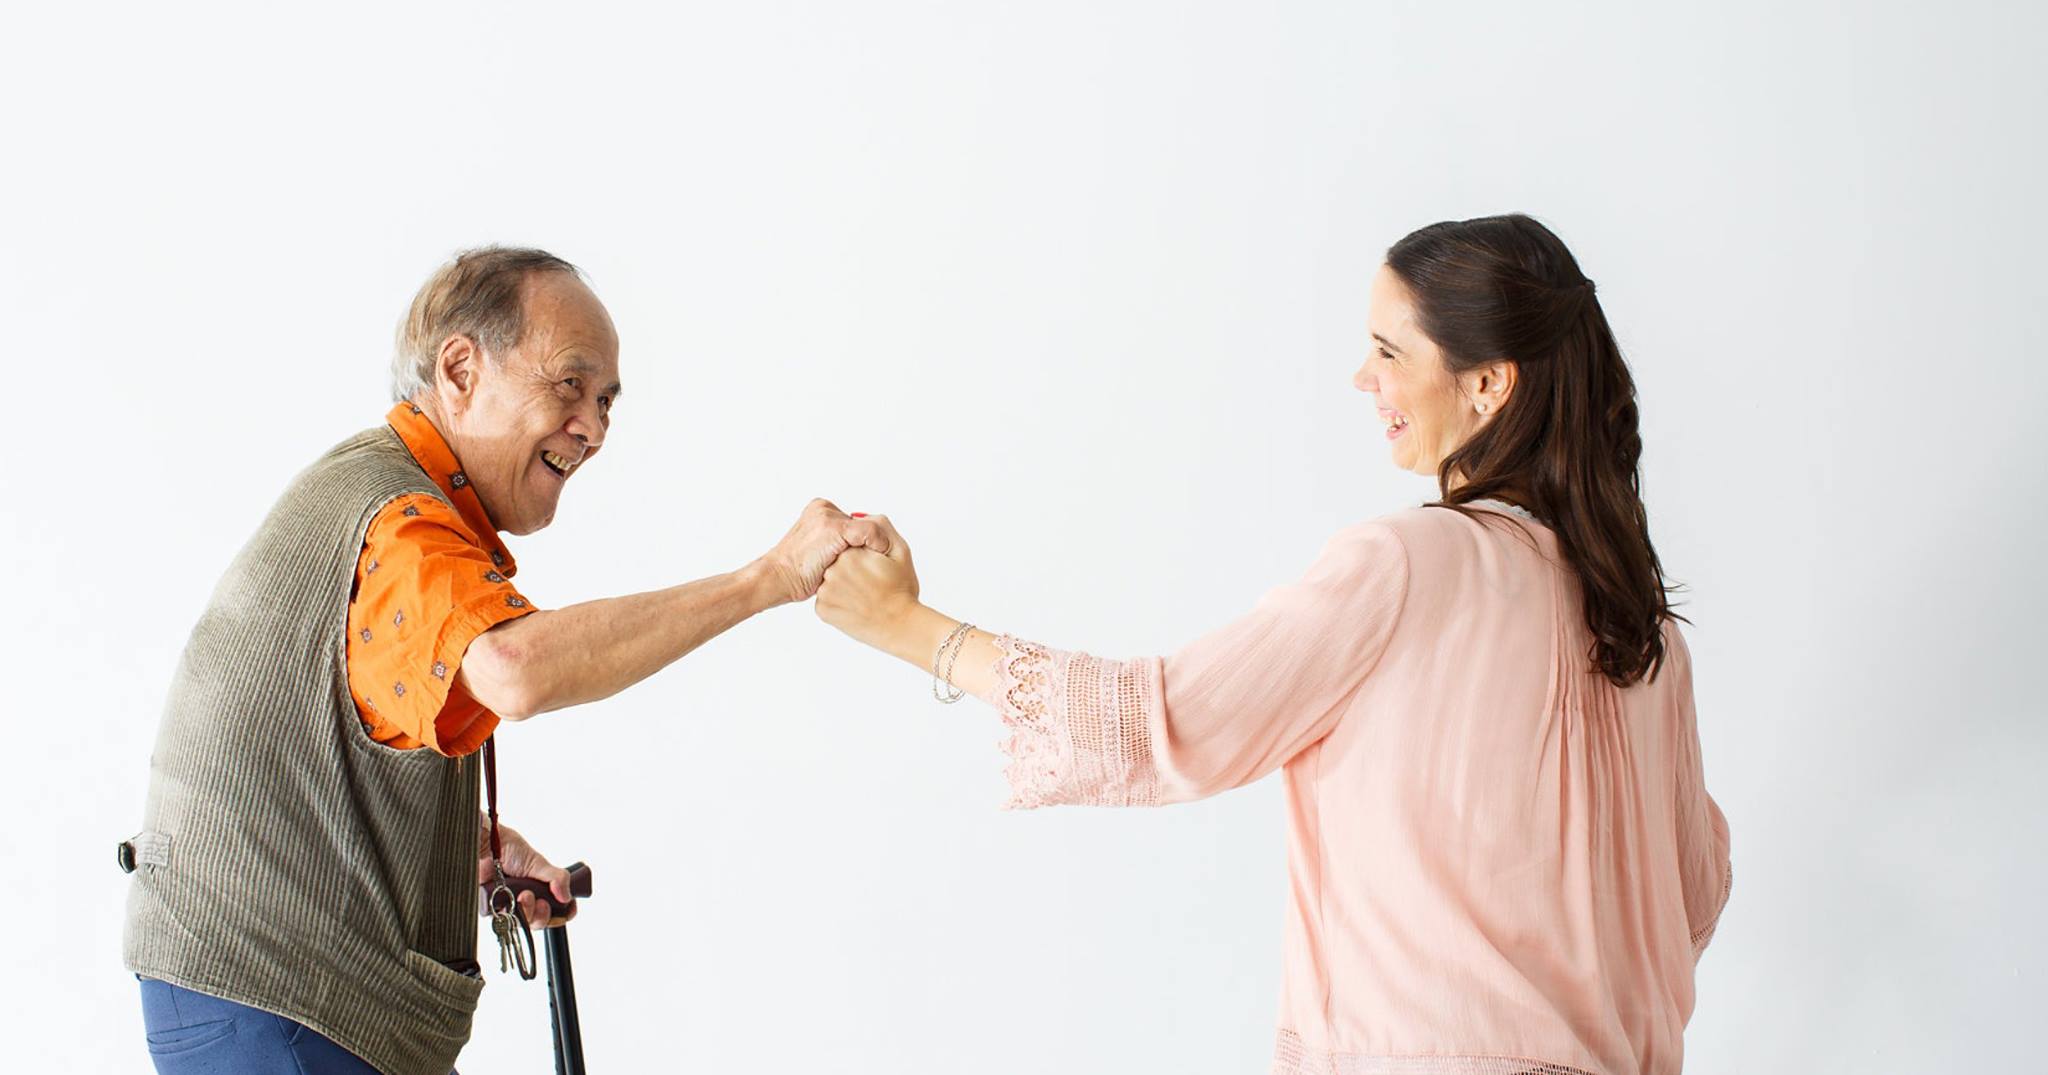 Uniting Dances Away Dementia